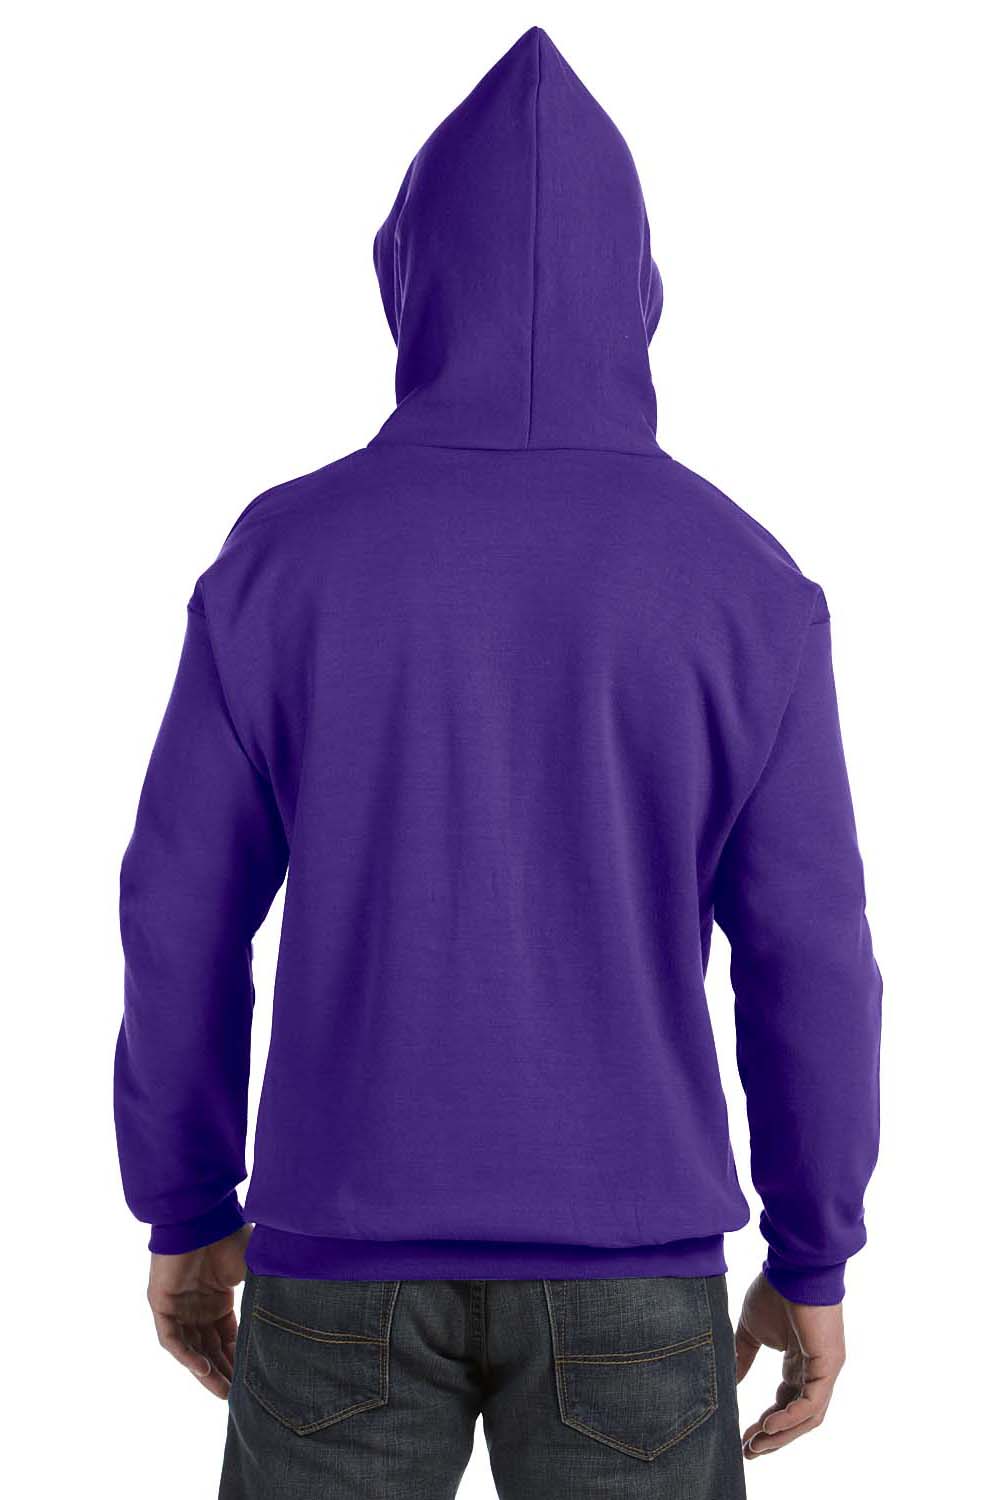 Hanes P170 Mens EcoSmart Print Pro XP Hooded Sweatshirt Hoodie Purple Back